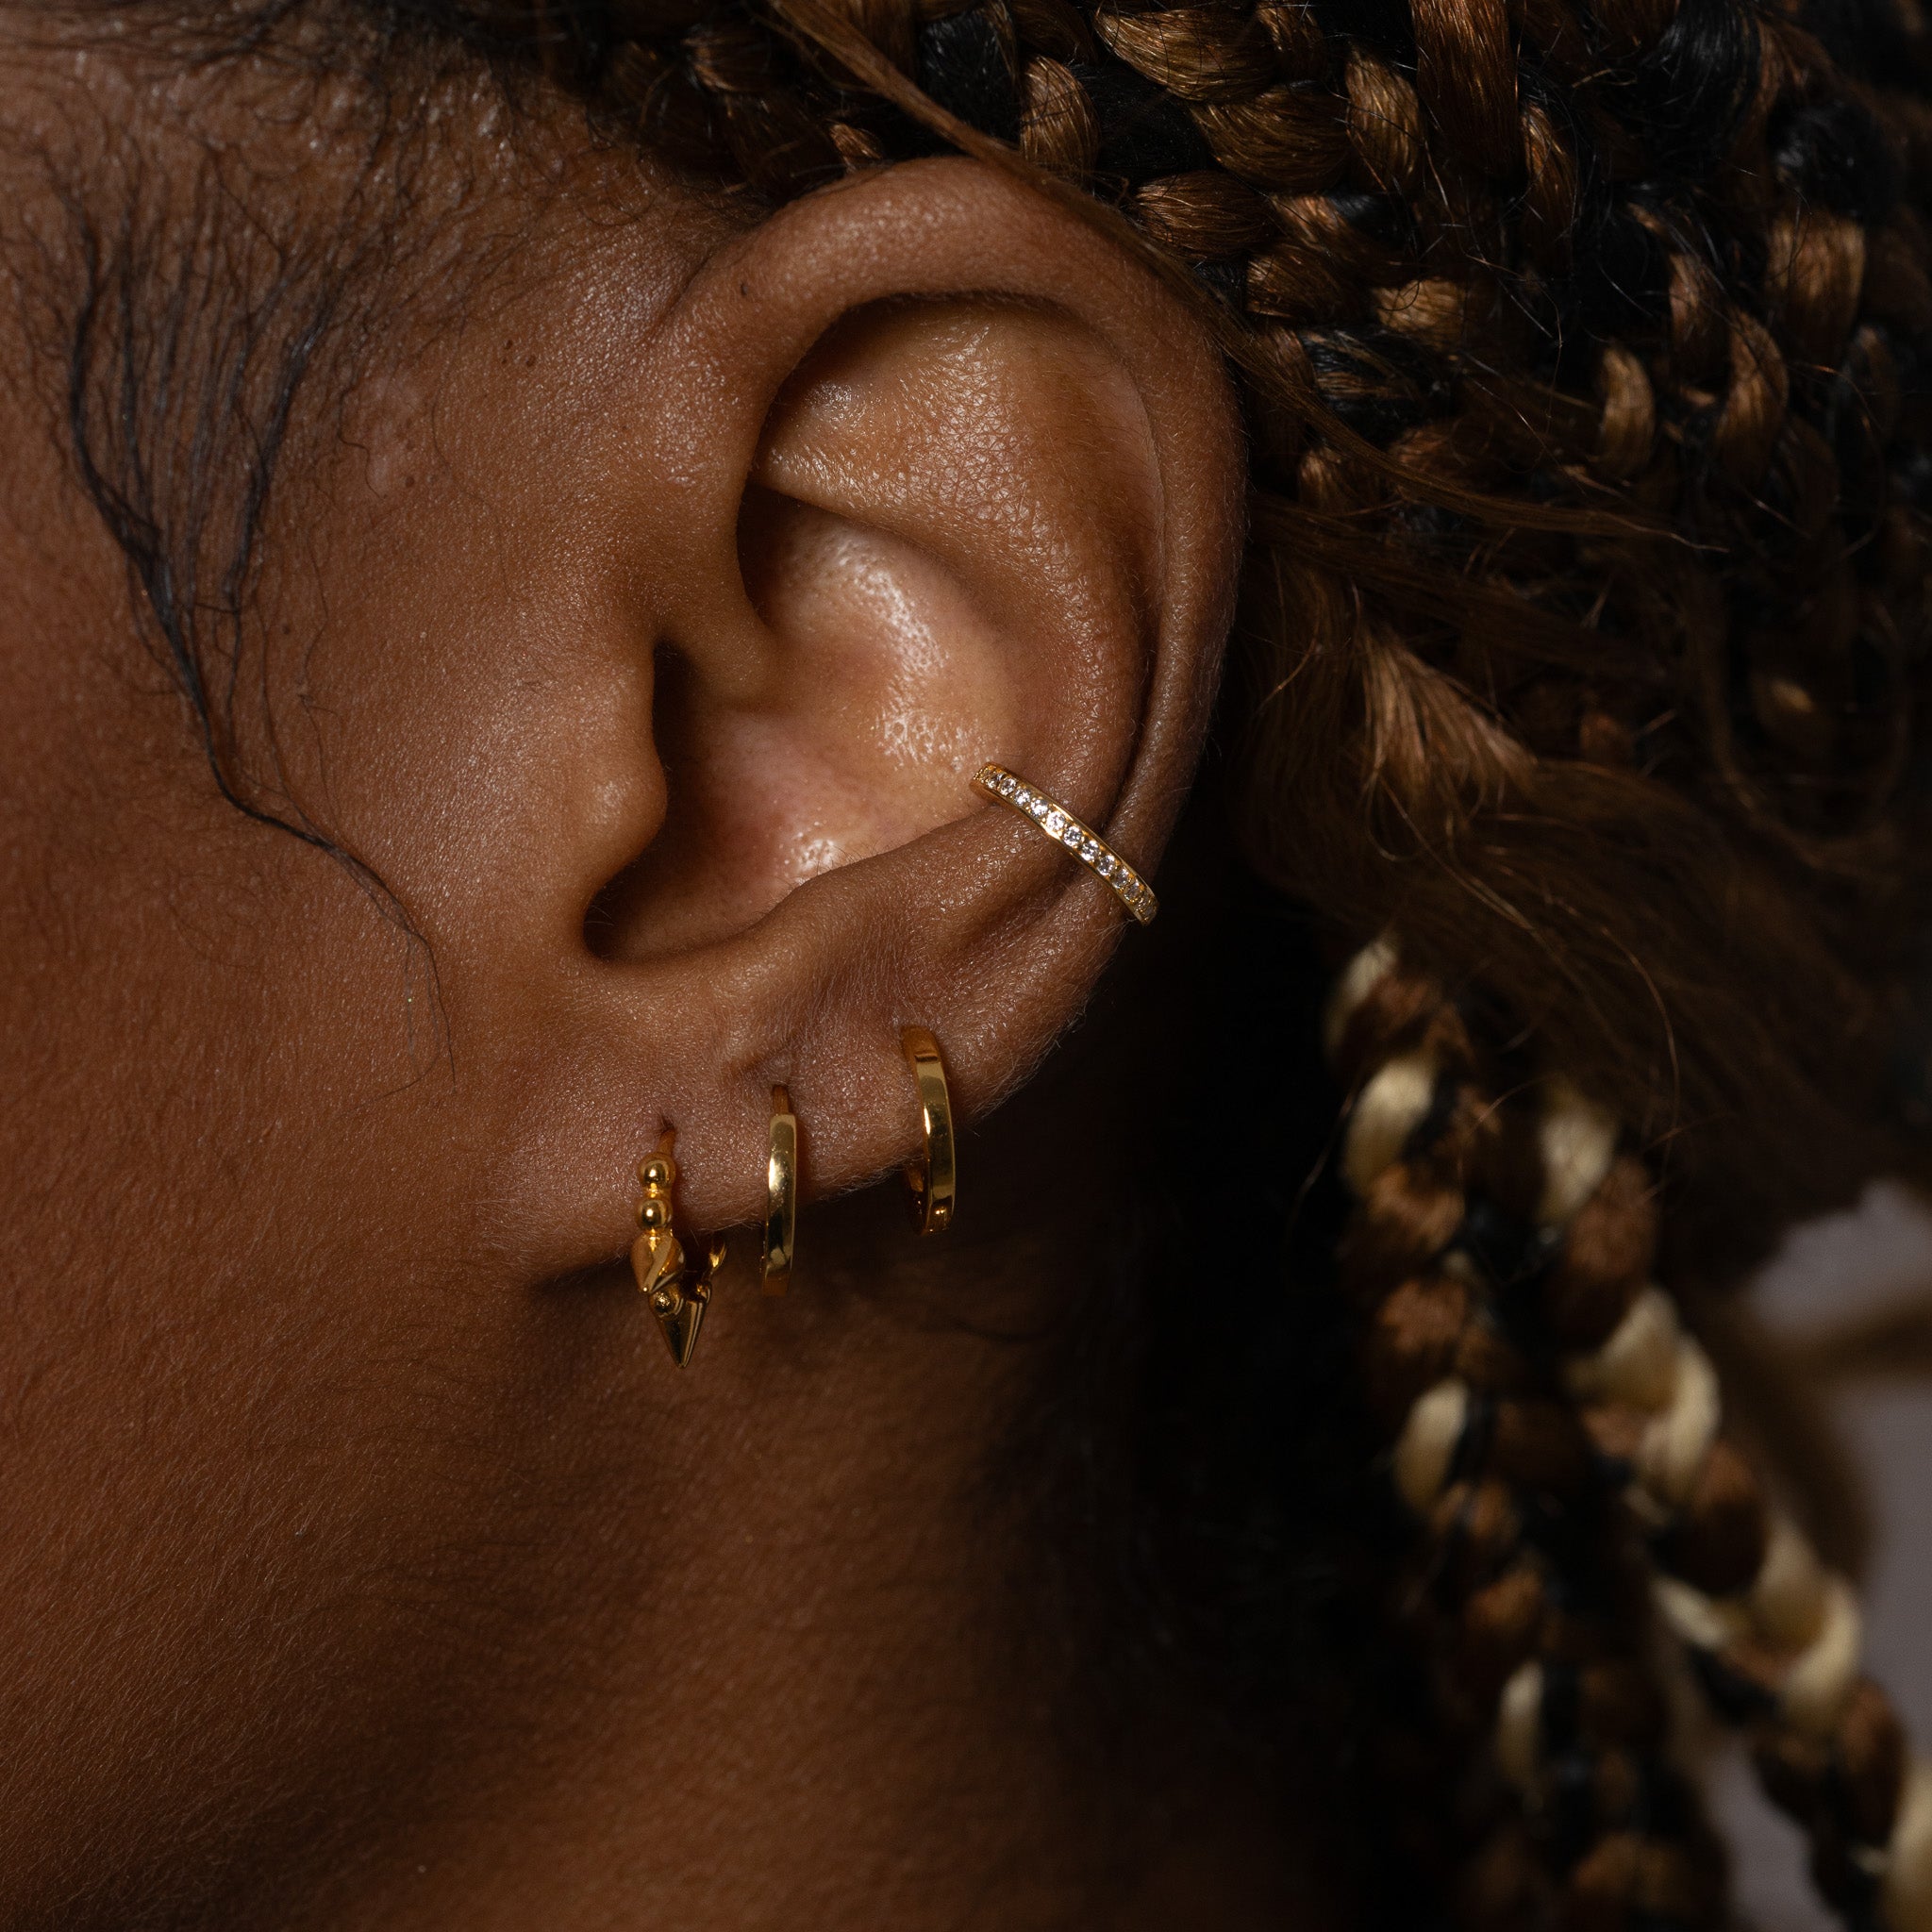 Mini Point Petite Triple Spikes Huggie Hoops Tiny Gold Spike Hoop Earrings by Doviana